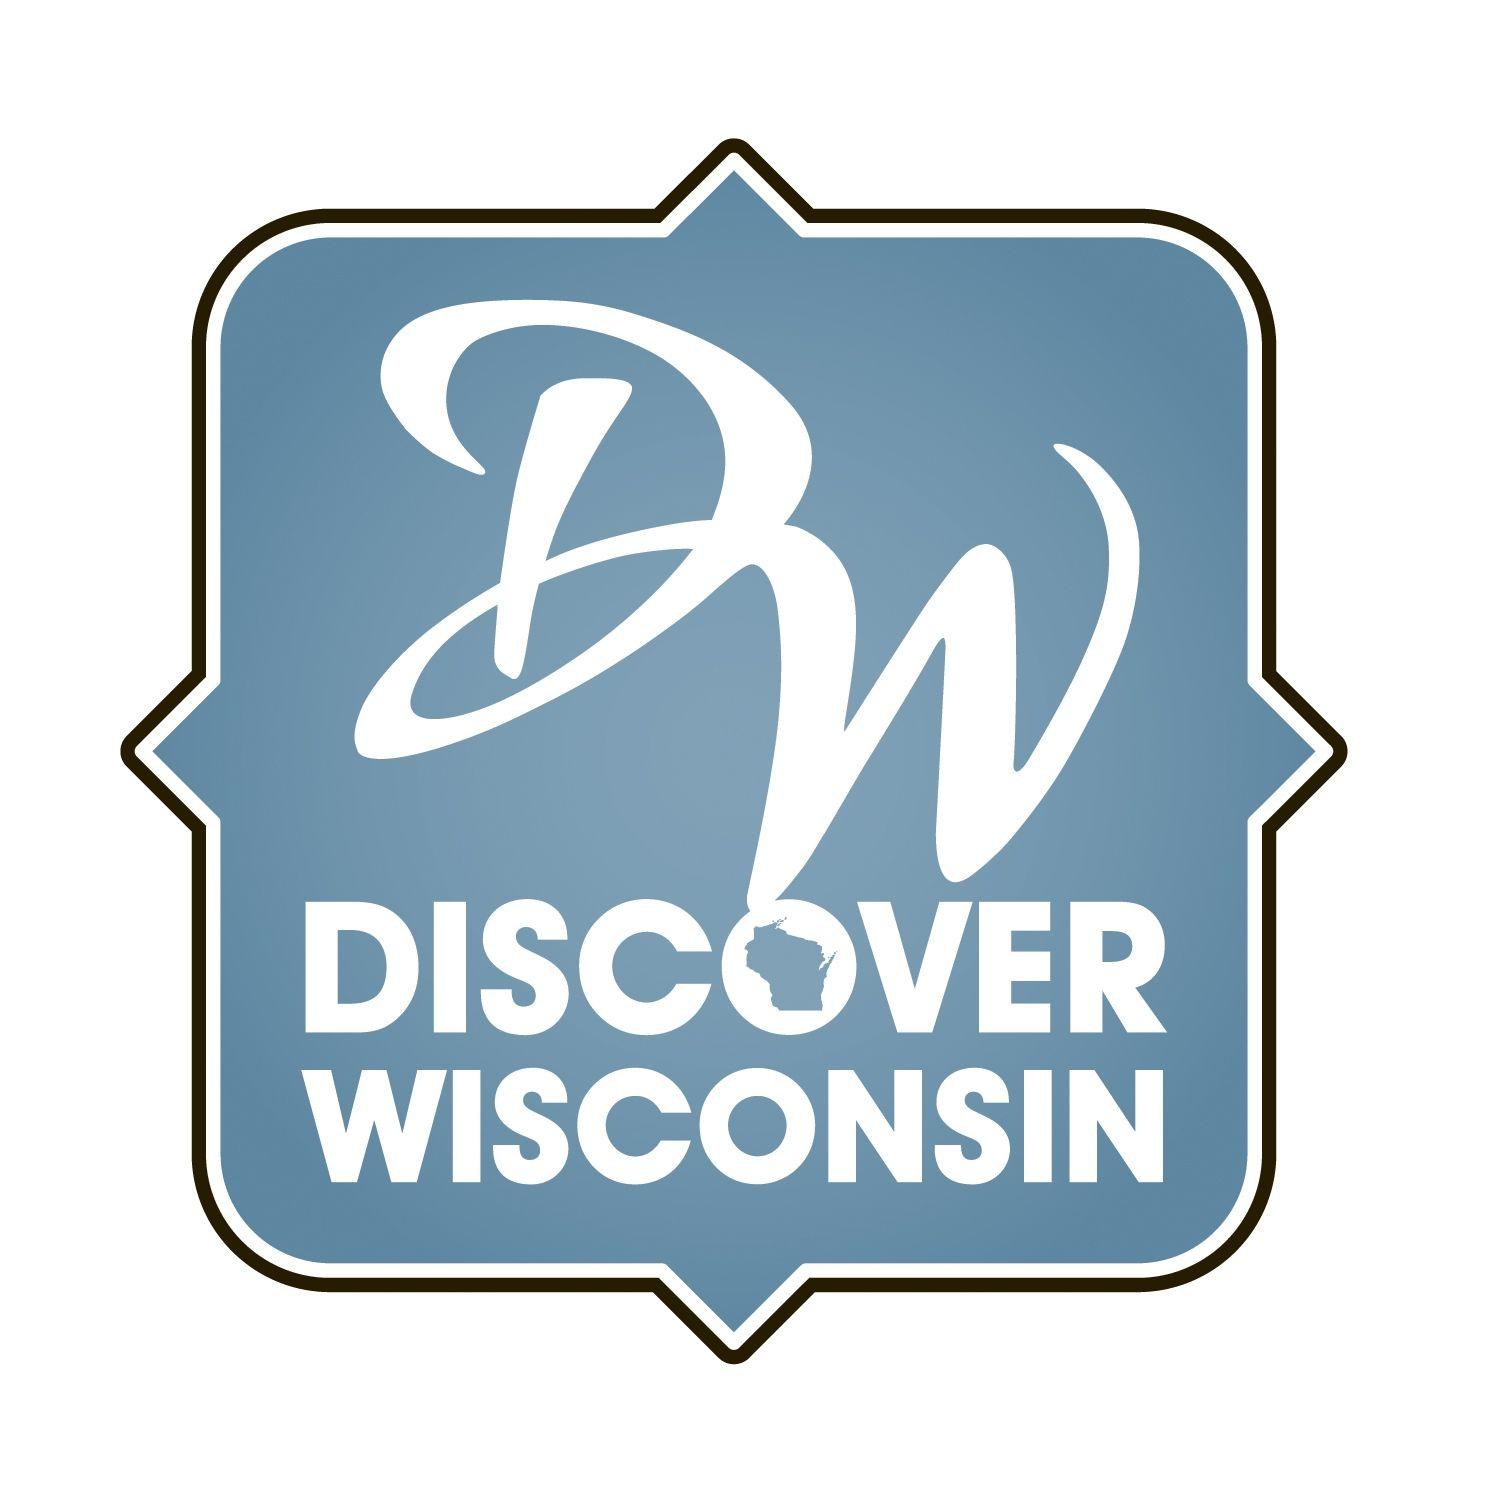 Wis Logo - Discover Wis. logo Sports Publishing Network, Inc